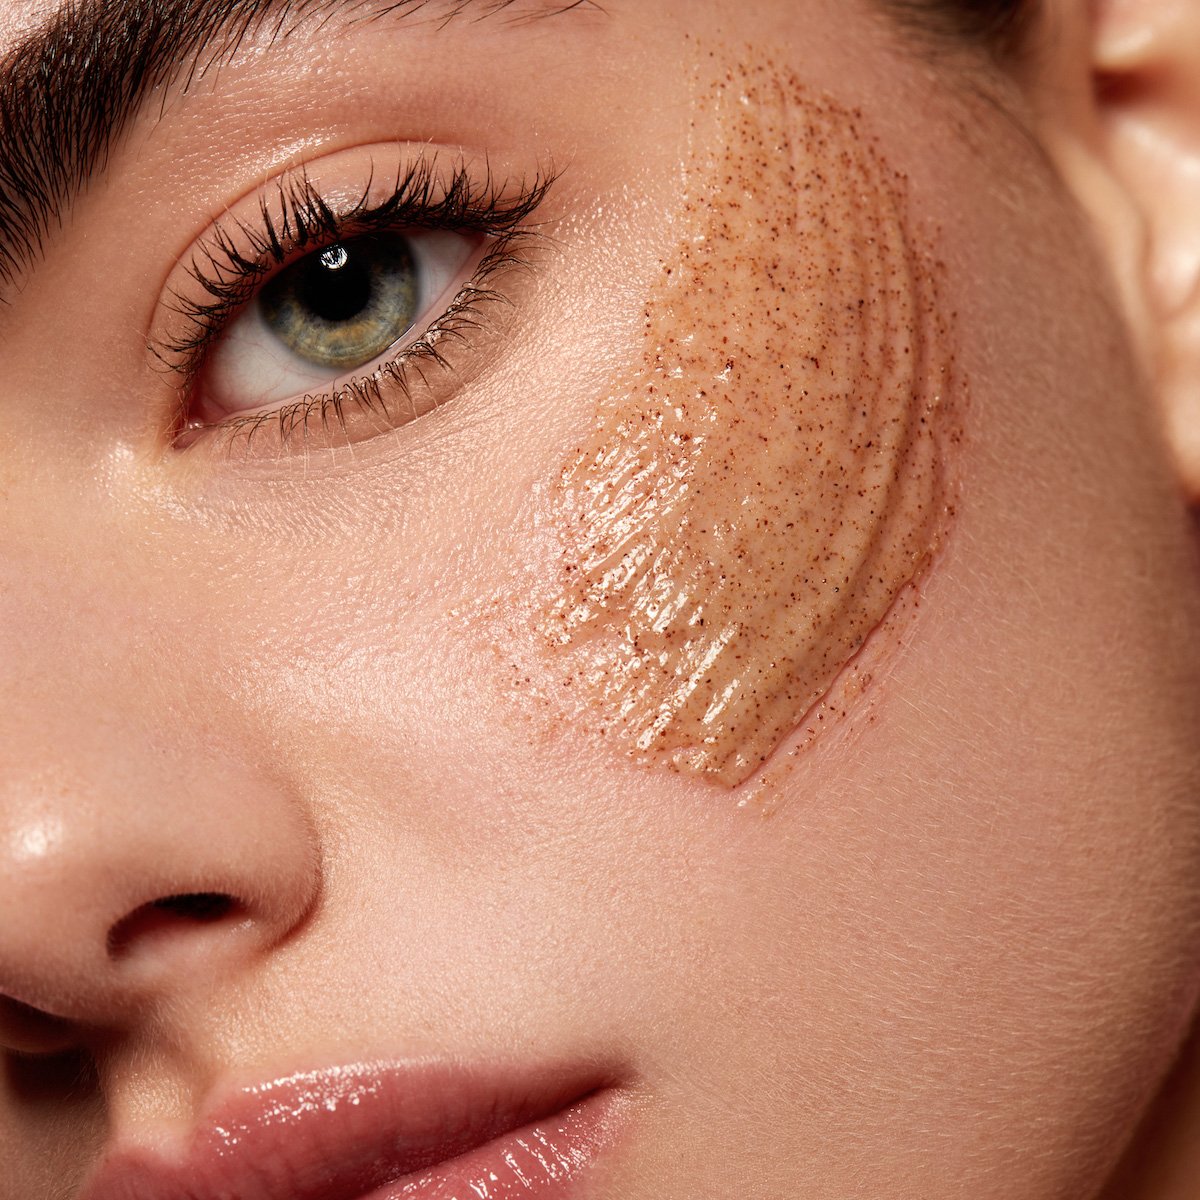 Model using Kylie Skin Walnut Face Scrub by Kylie Jenner